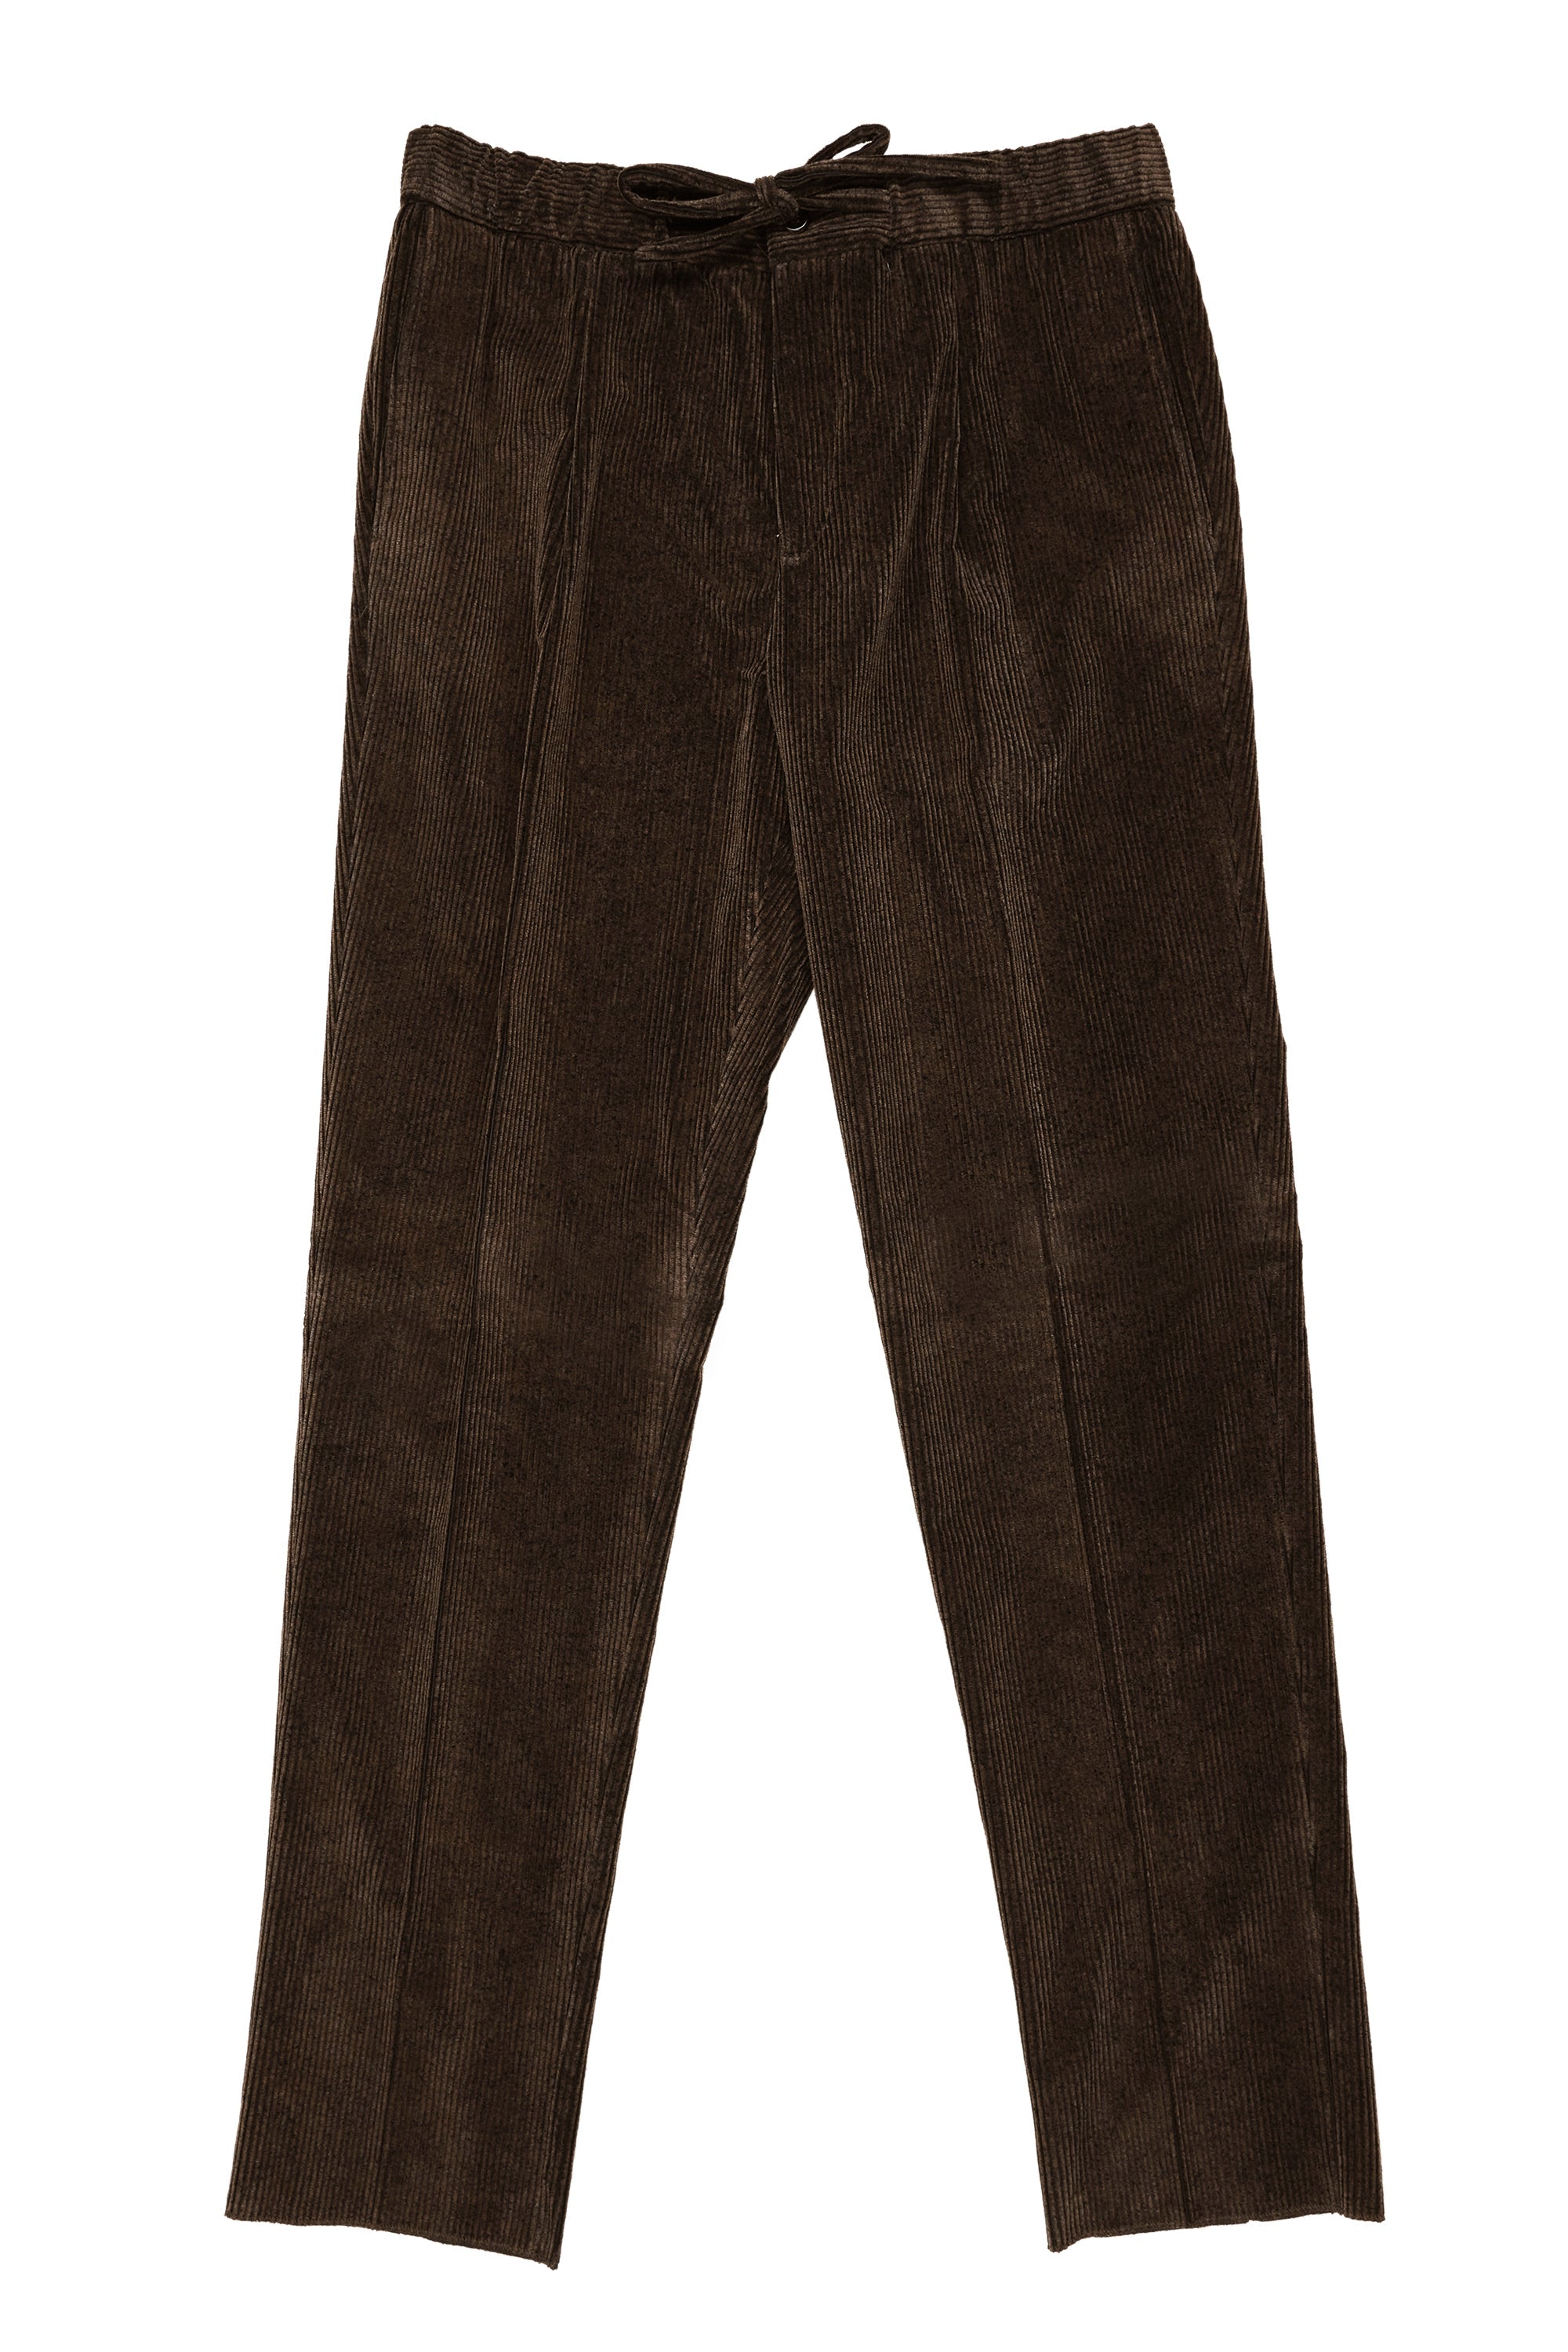 Drumohr Brown Cotton Corduroy Drawstring Trousers